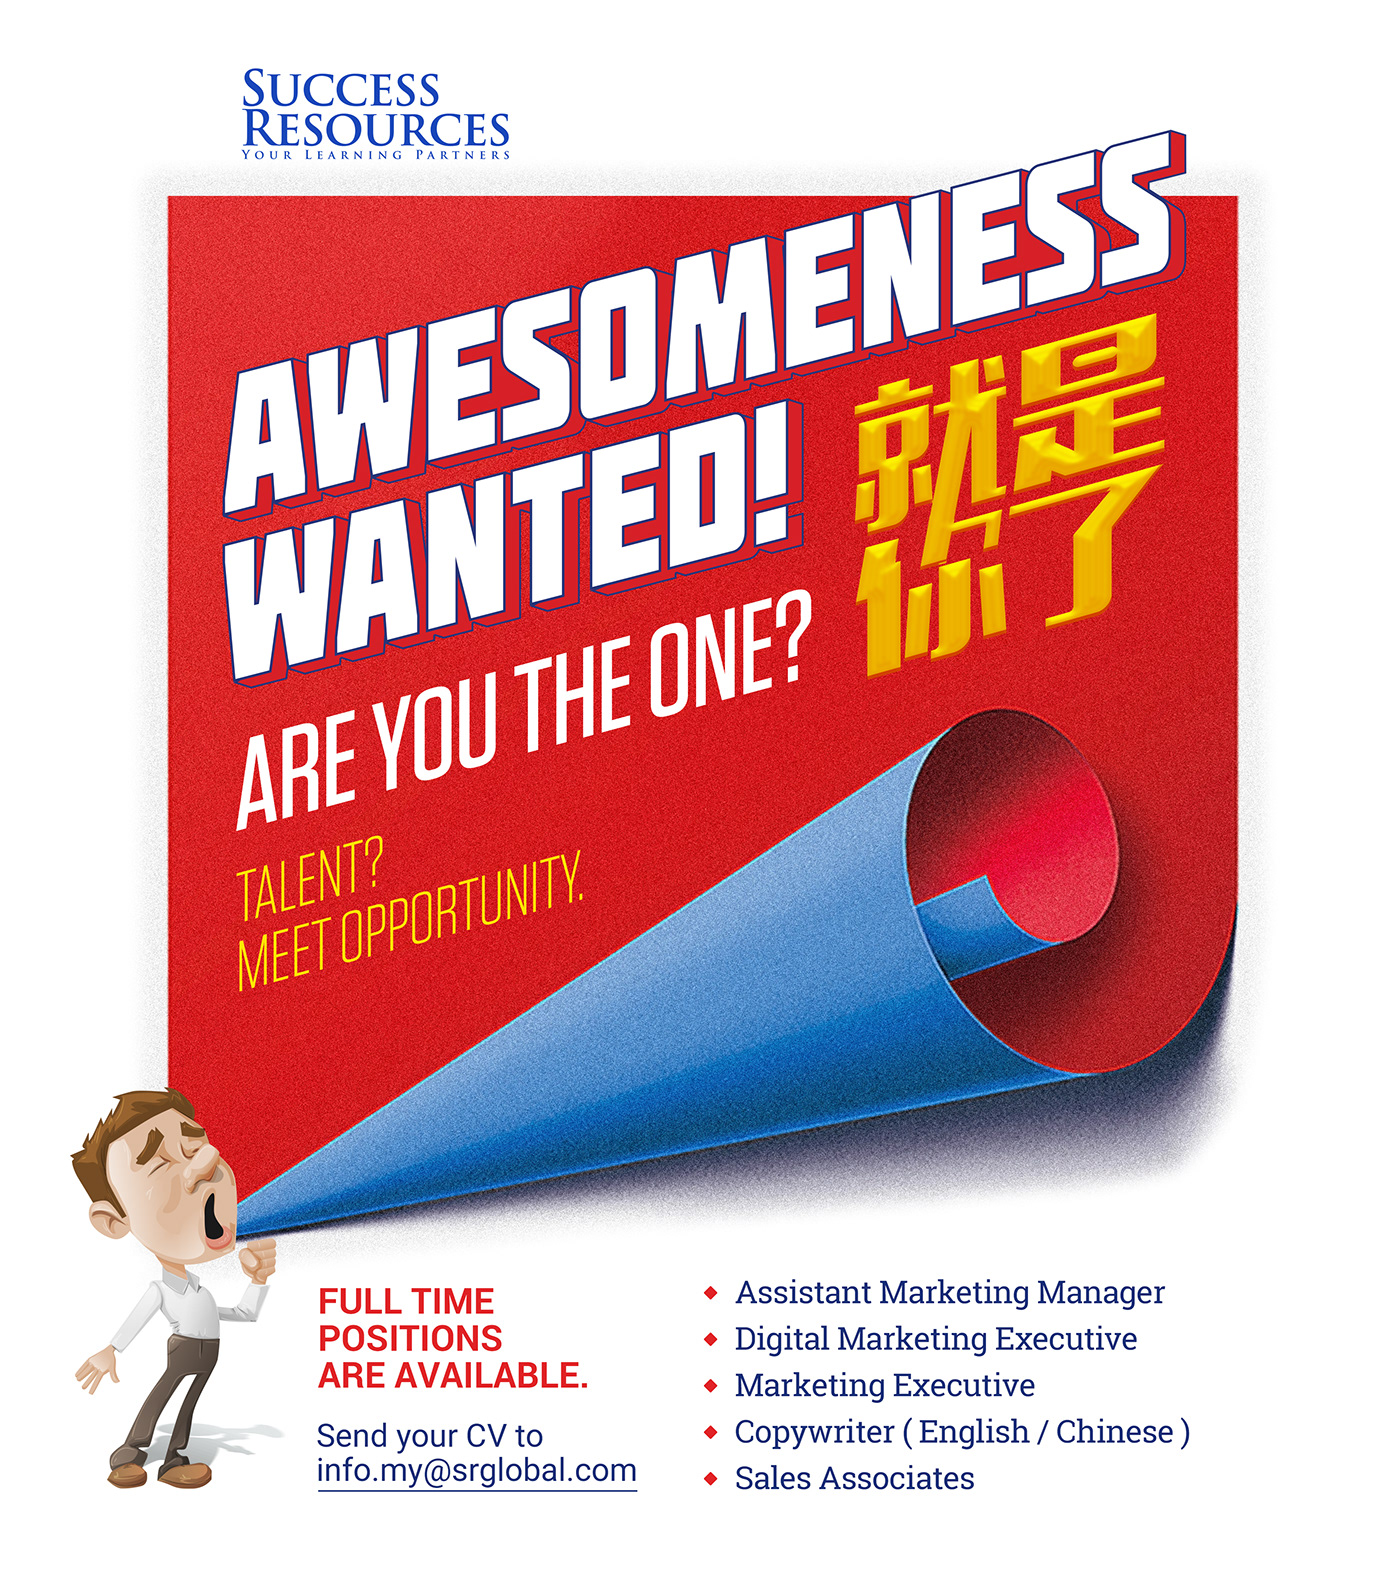 recruitment vacancy TAlent opportunity shout loudspeaker Megaphone wanted position paper